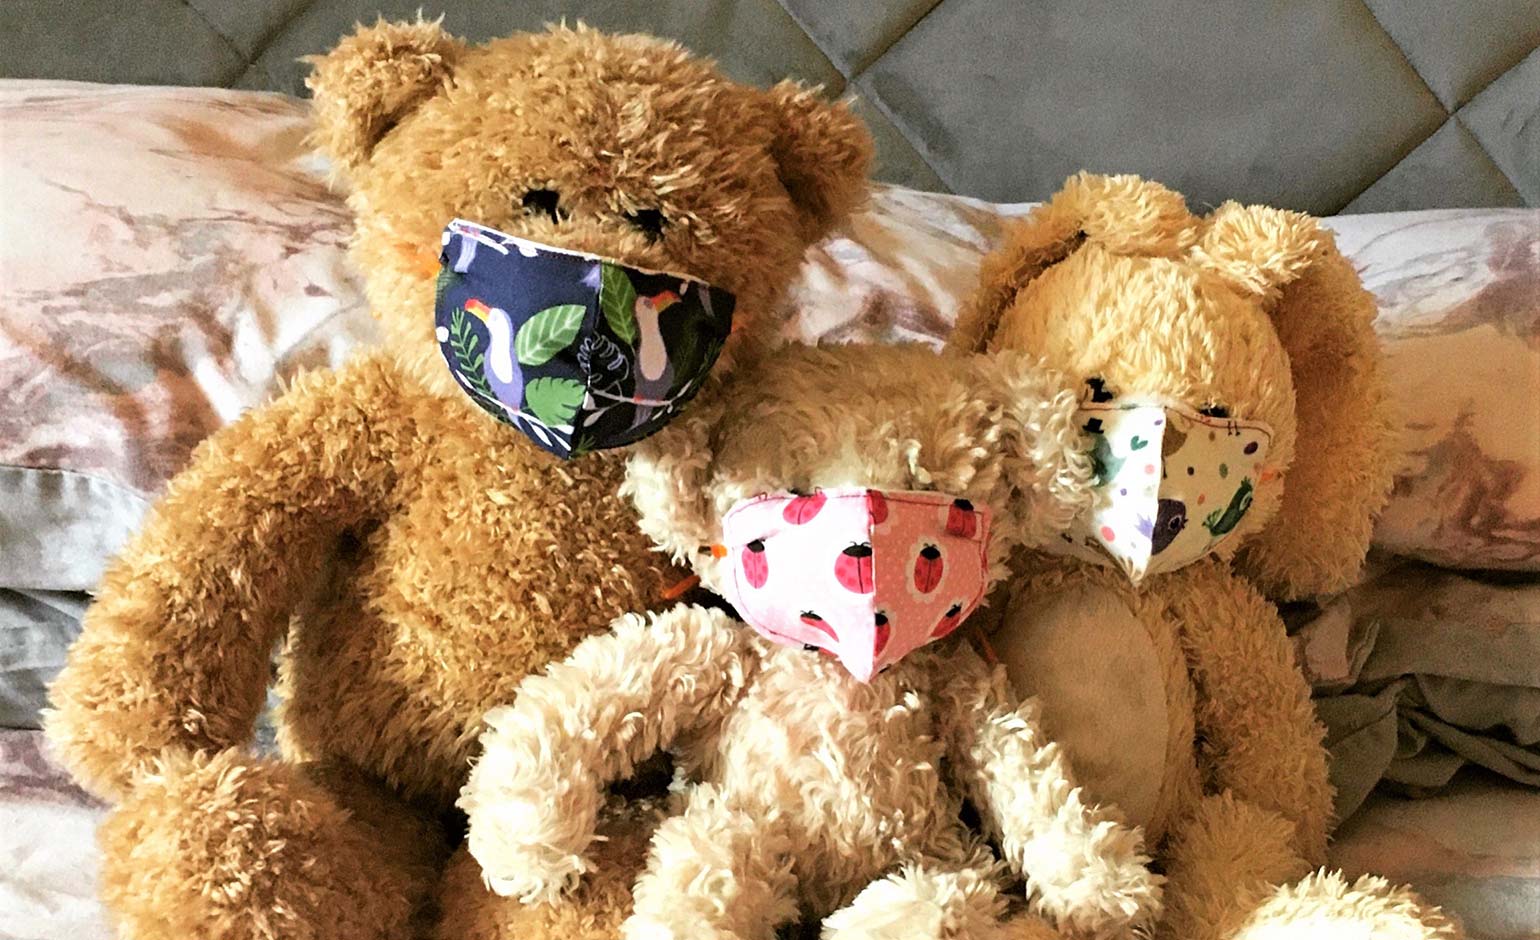 matching teddy bears